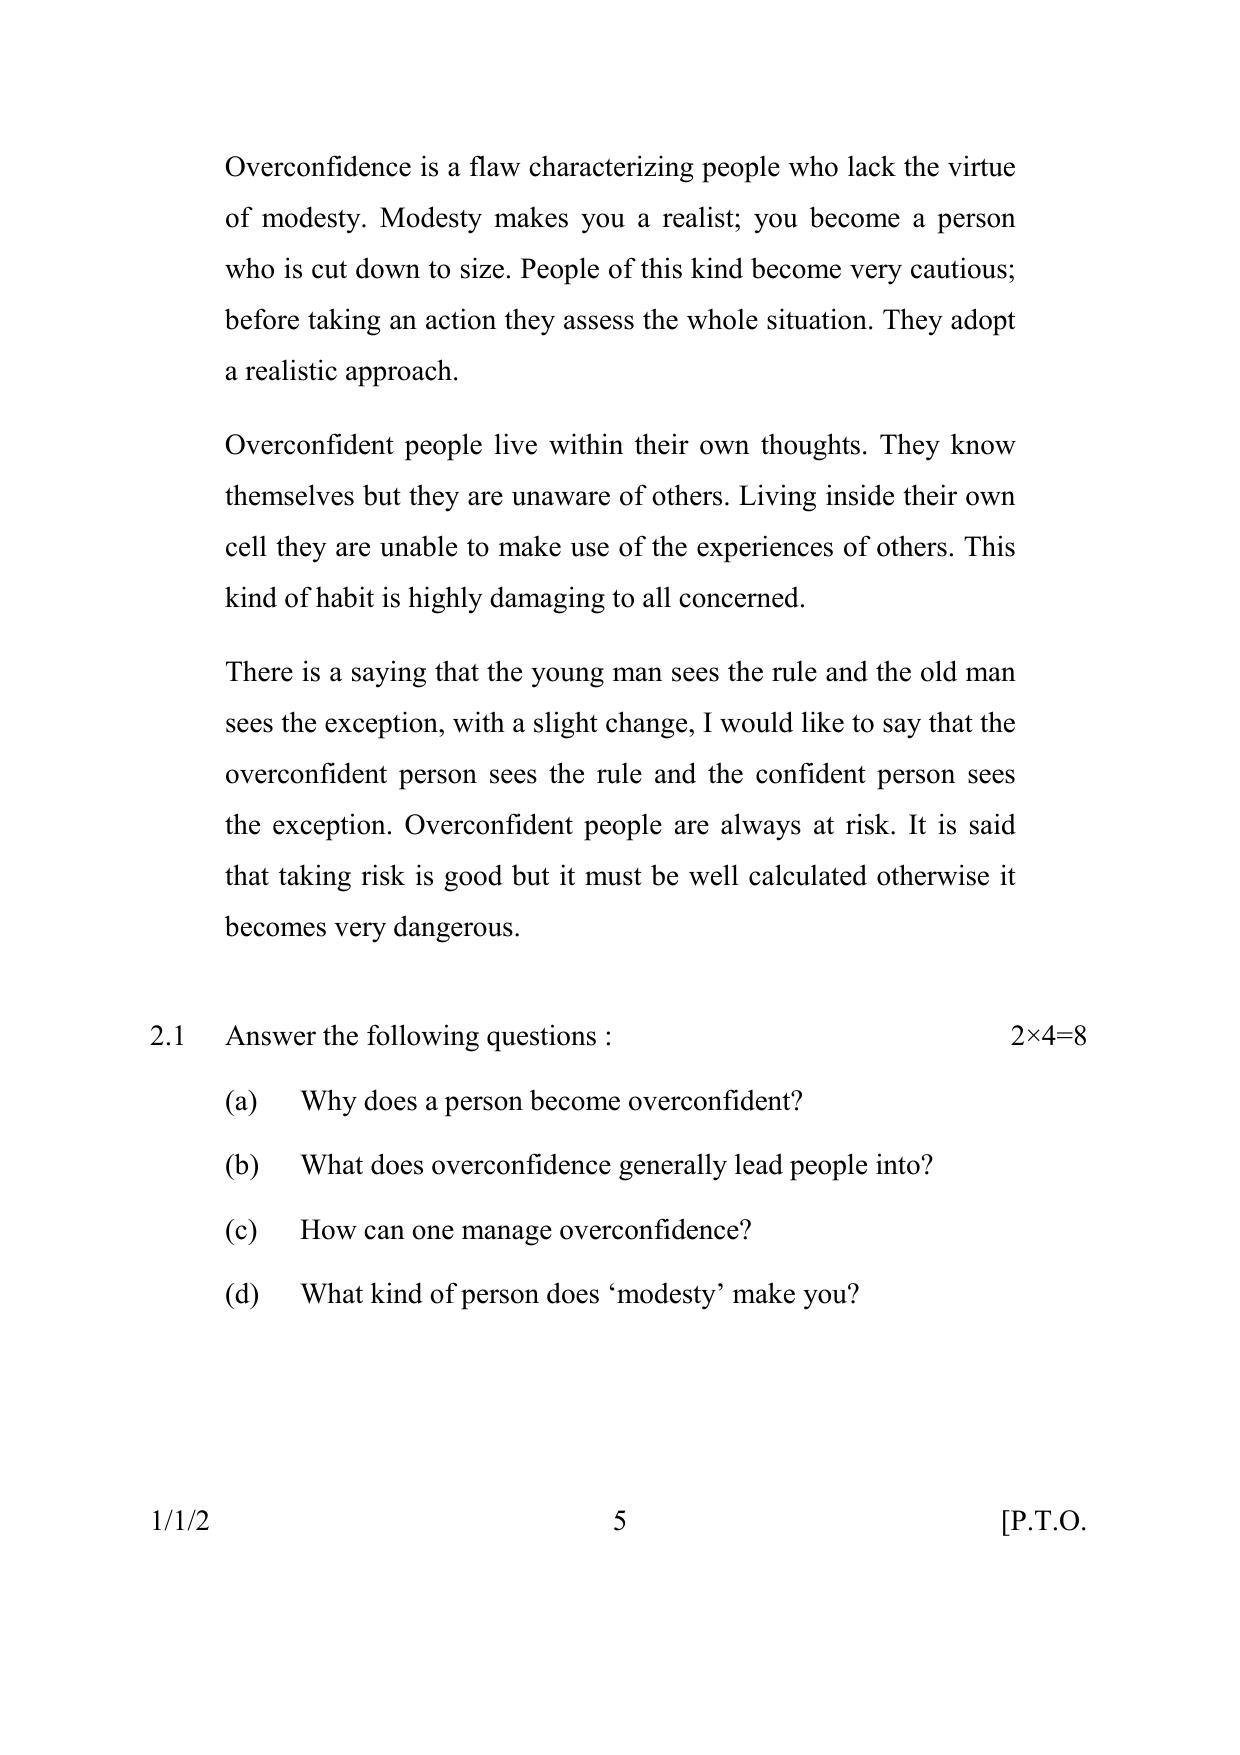 CBSE Class 10 1-1-2 ENGLISH COMMUNICATIVE 2016 Question Paper - Page 5